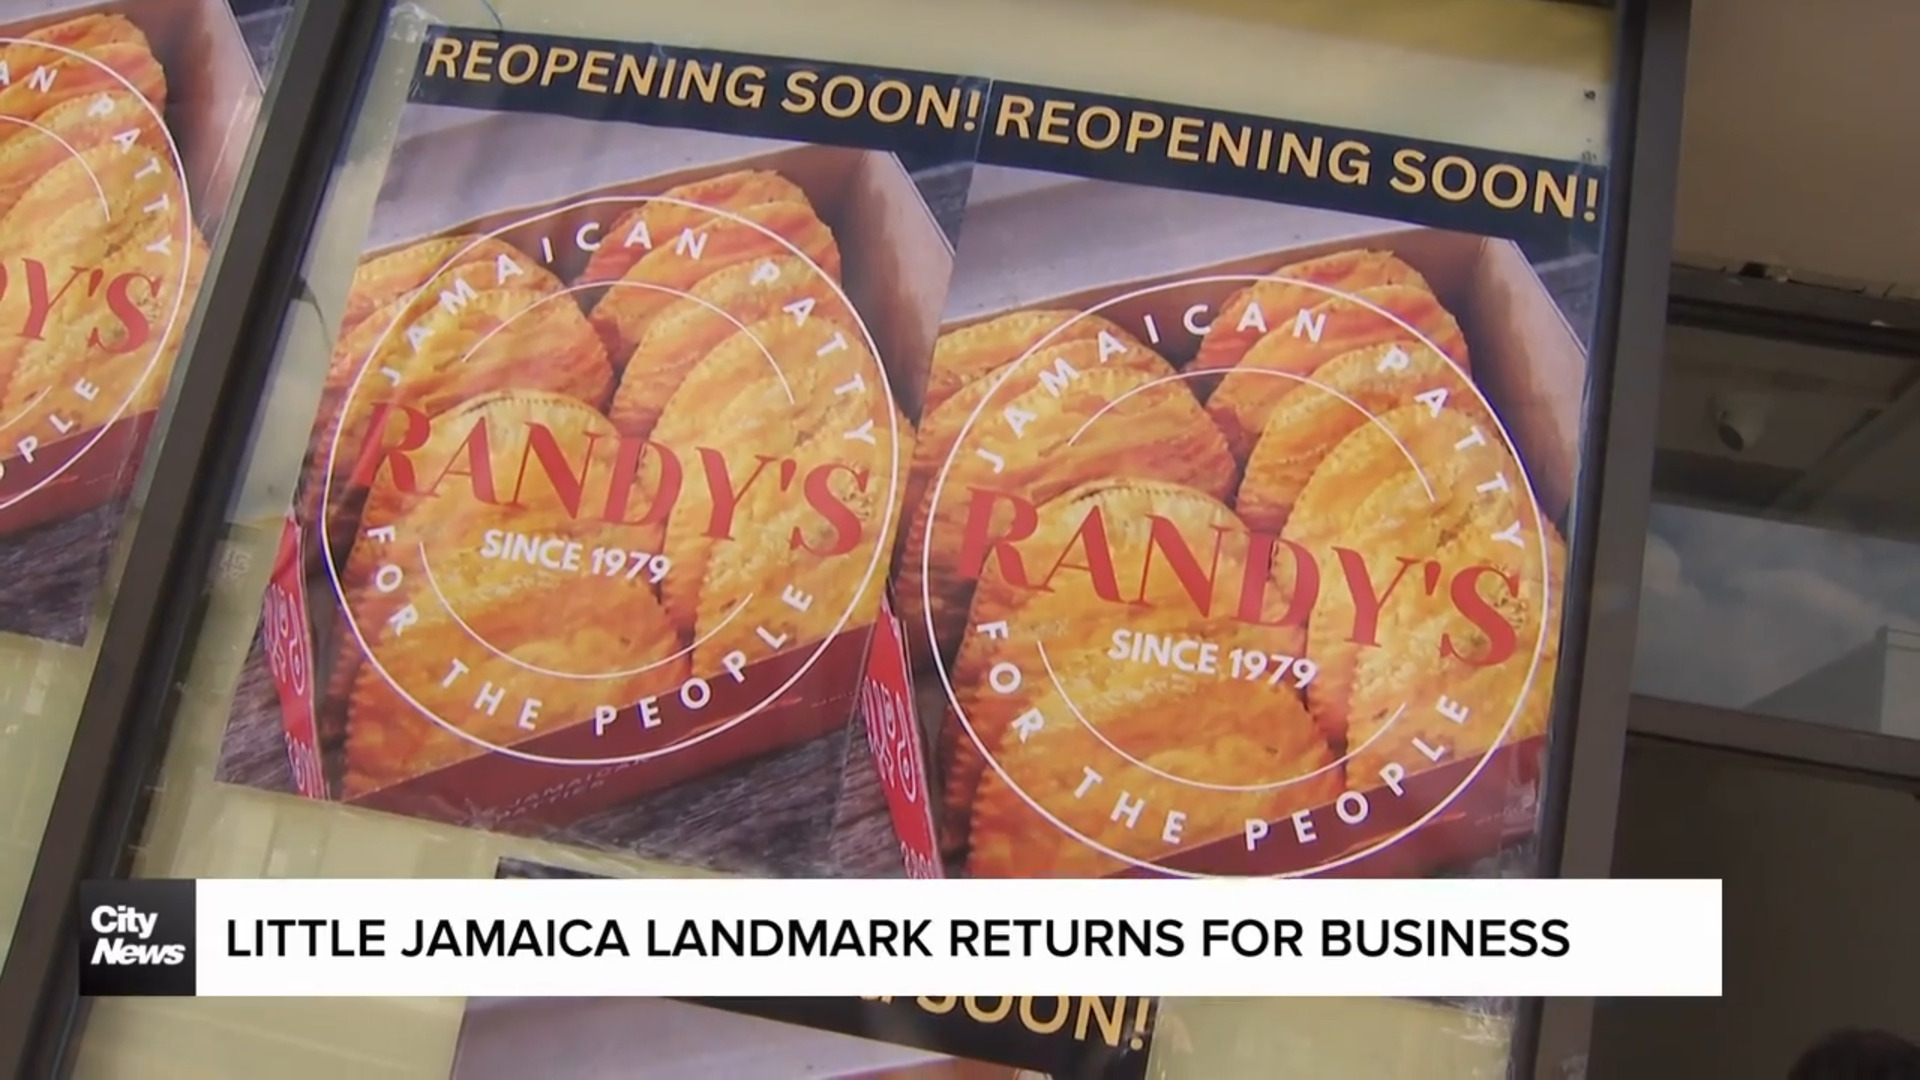 Little Jamaica landmark Randy's gets set to reopen soon